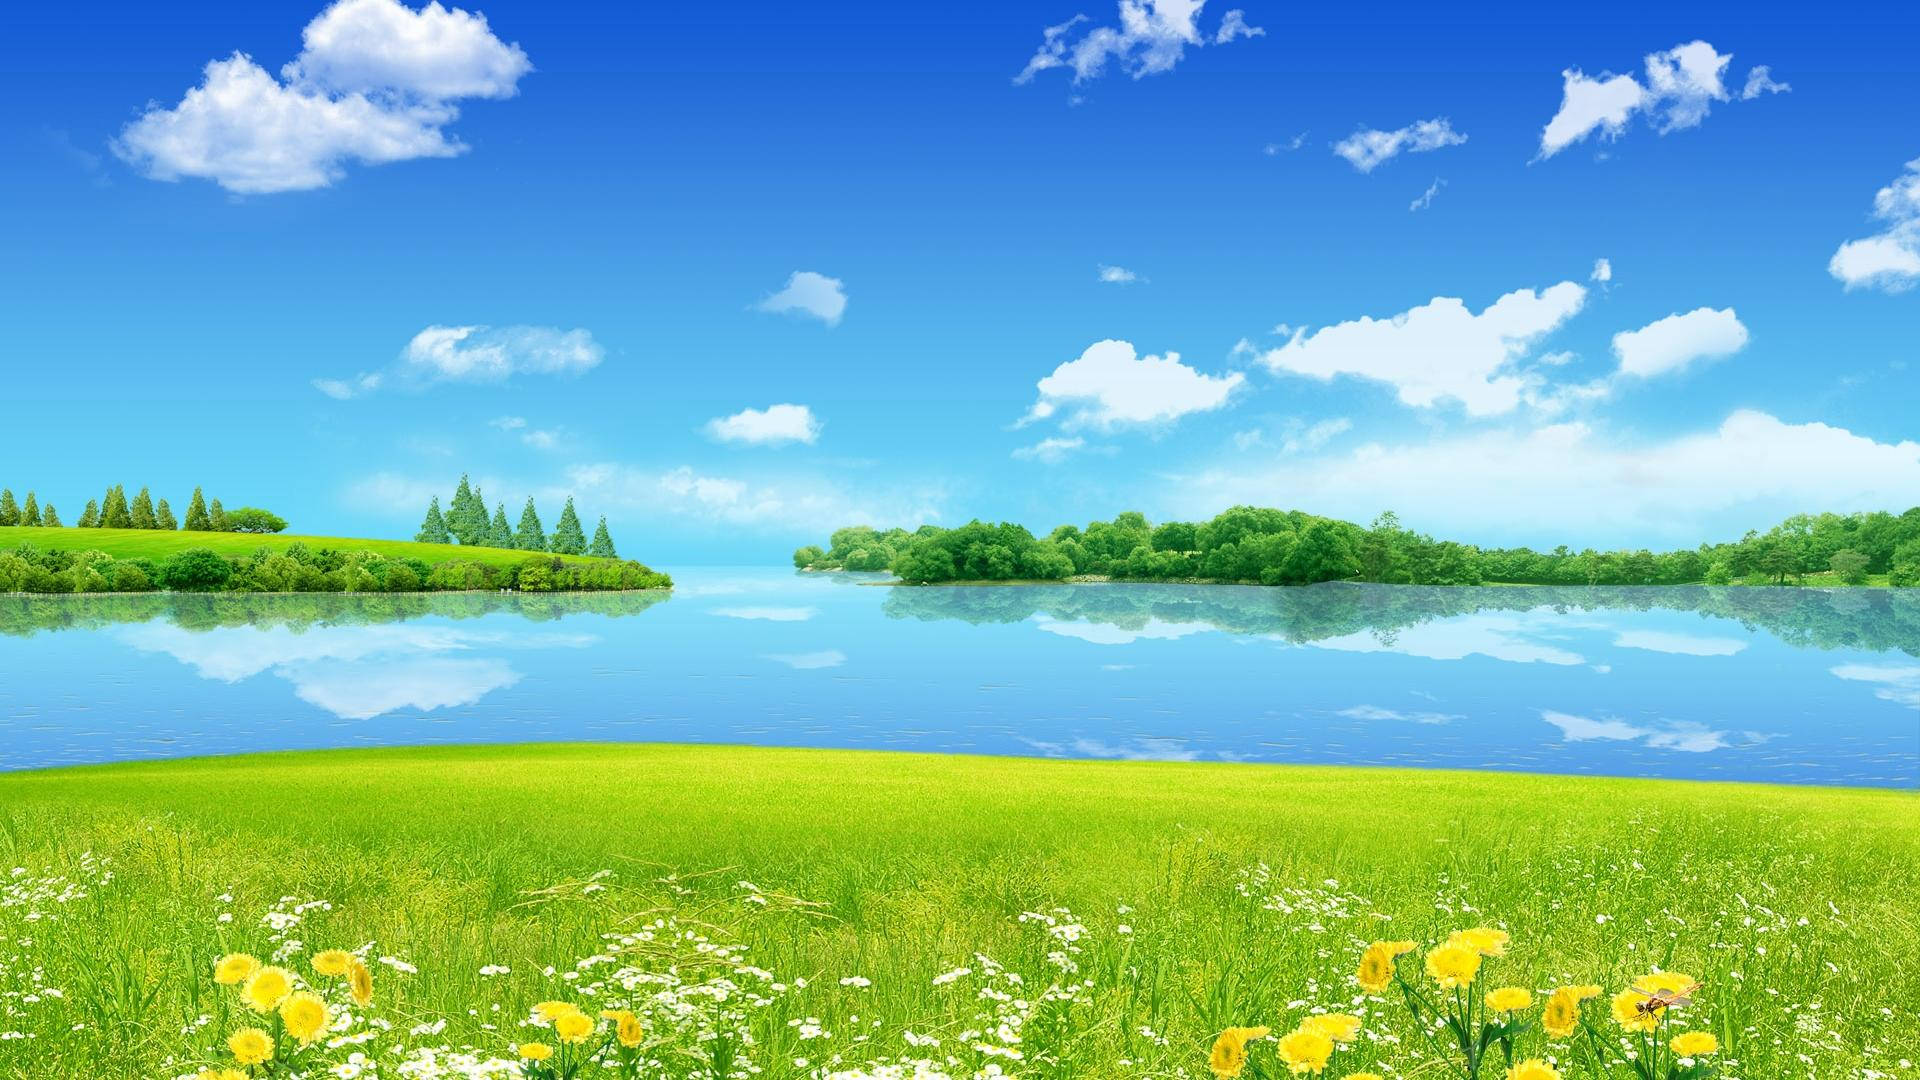 Lake and green field in summer desktop wallpaper.